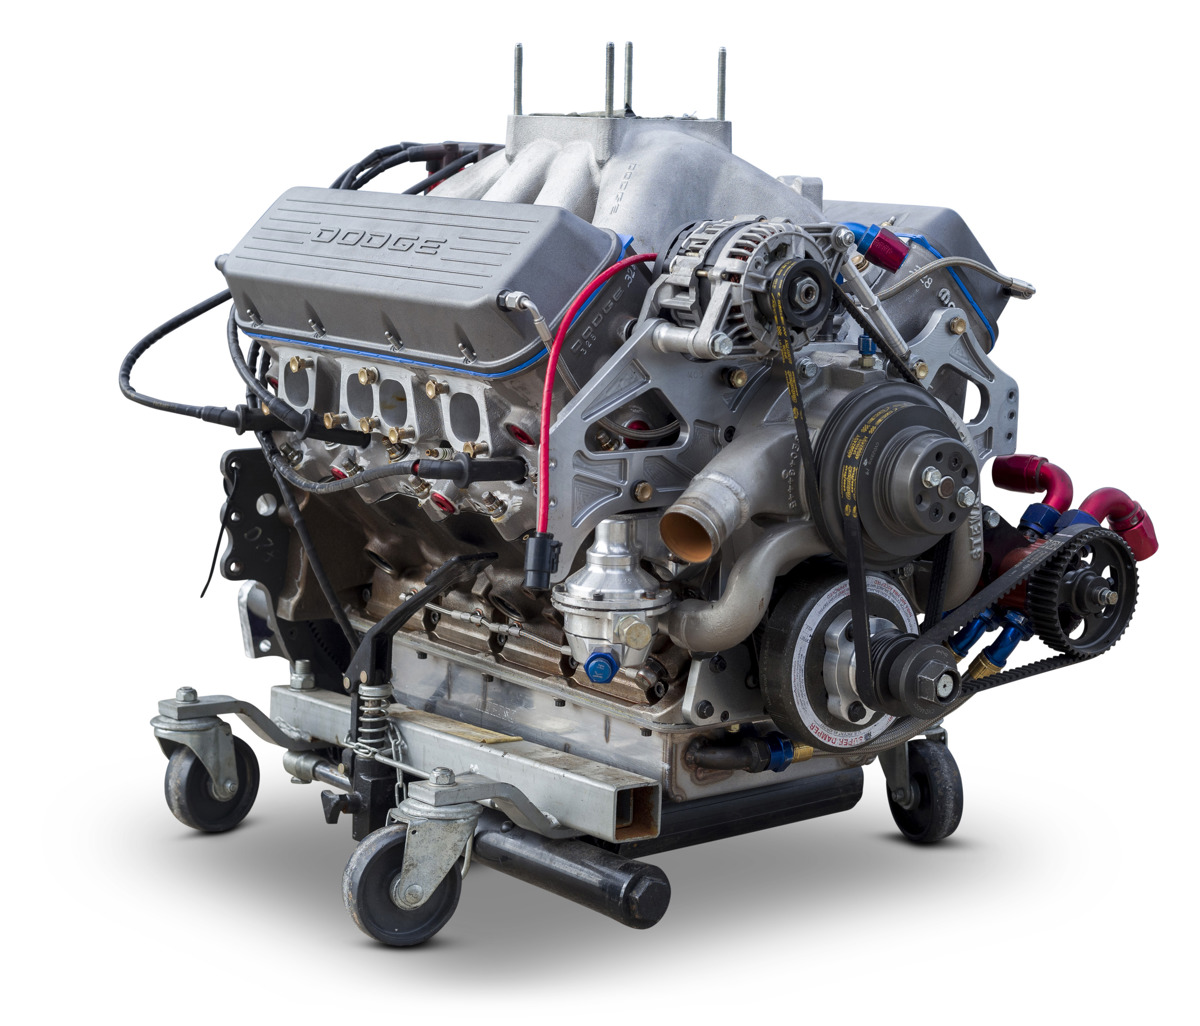 Penske Racing Nascar Dodge V-8 Engine offered at RM Auctions Auburn Fall live auction 2020